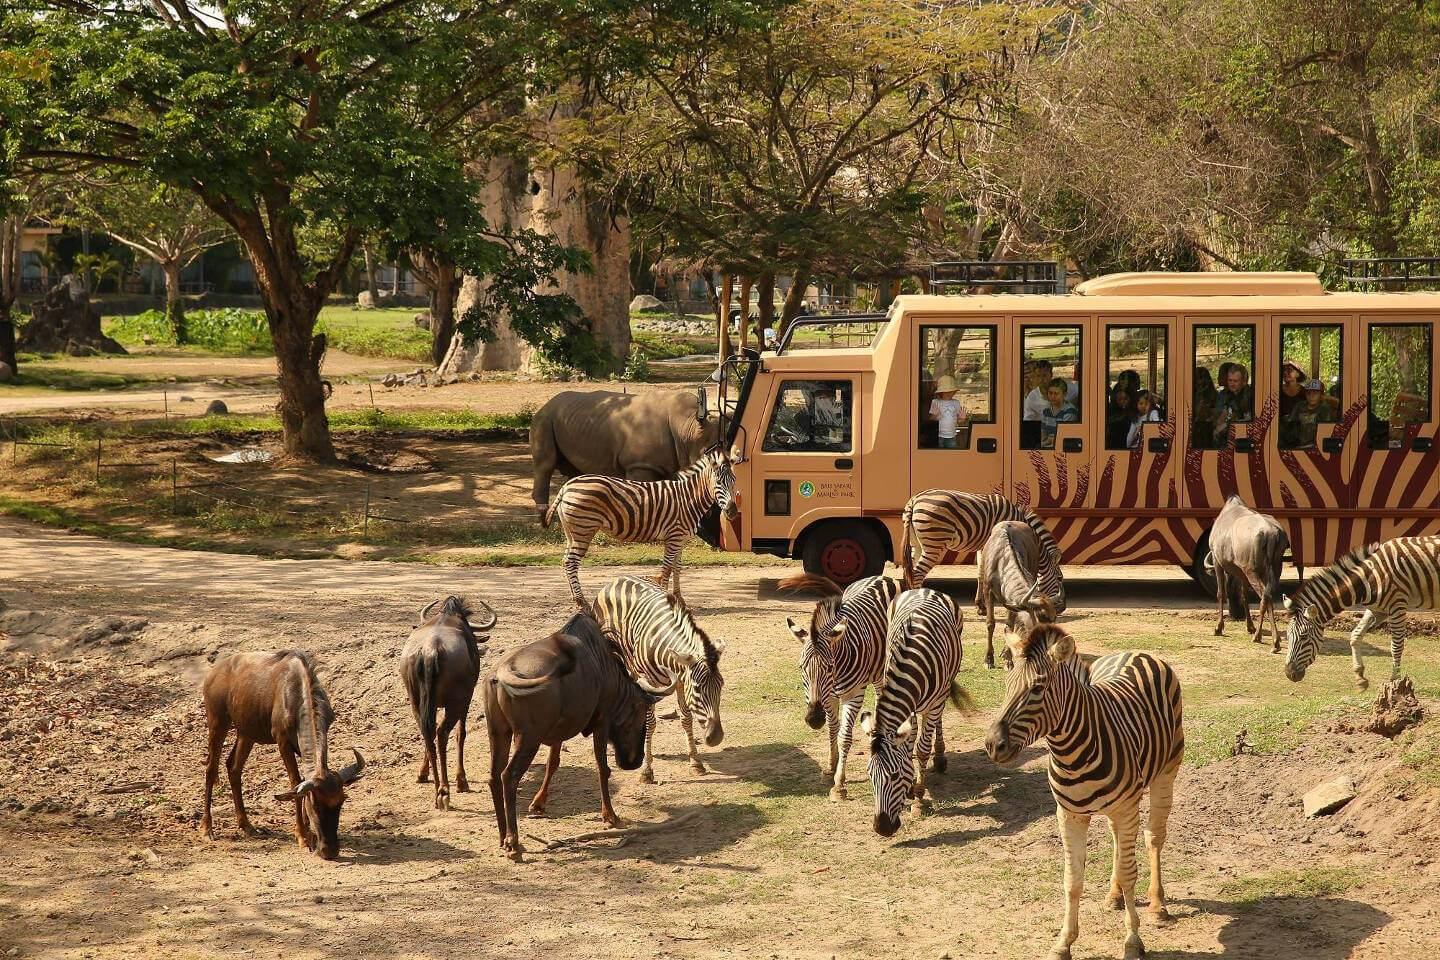 [LapakTrip] Tiket Masuk Taman Safari Bali – 1 Dewasa – Elephant Ride Rp447.000